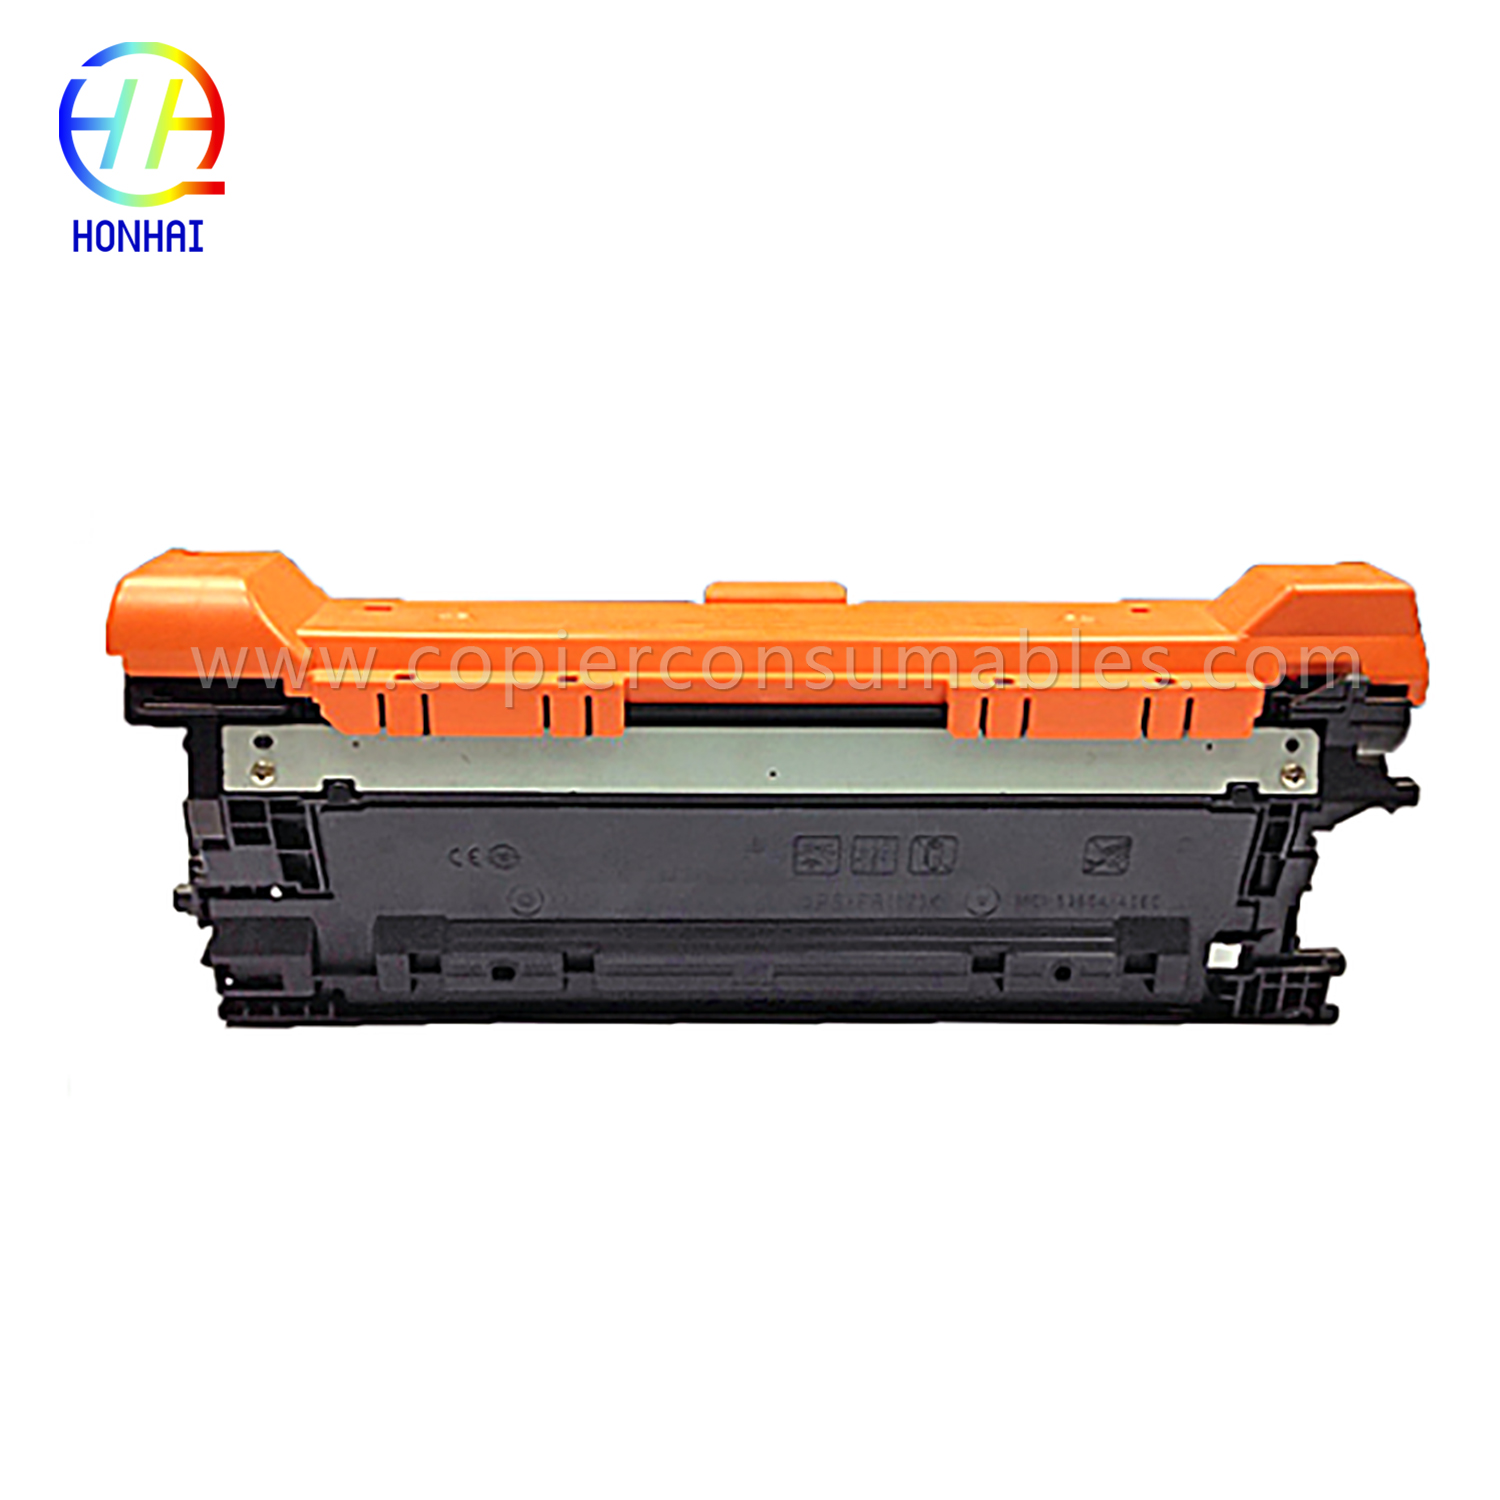 Ruvara Toner Cartridges HP Rudzi Laserjet Enterprise M552 M553 (CF362X) -1 拷贝